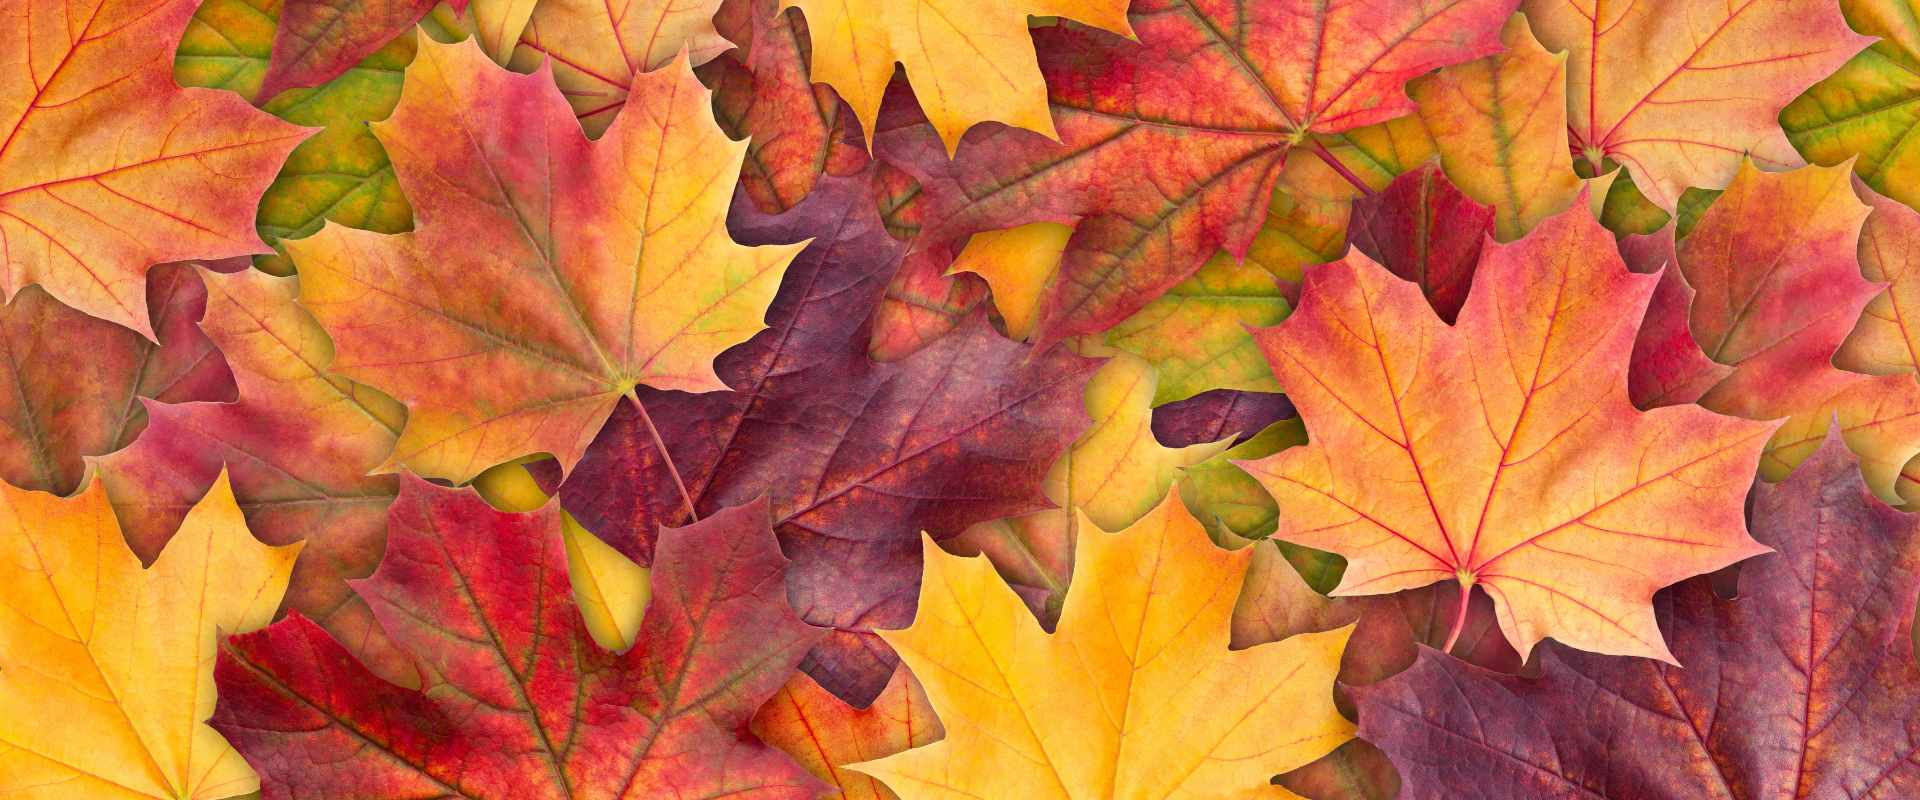 Autumn Leaves Colouring Worksheet